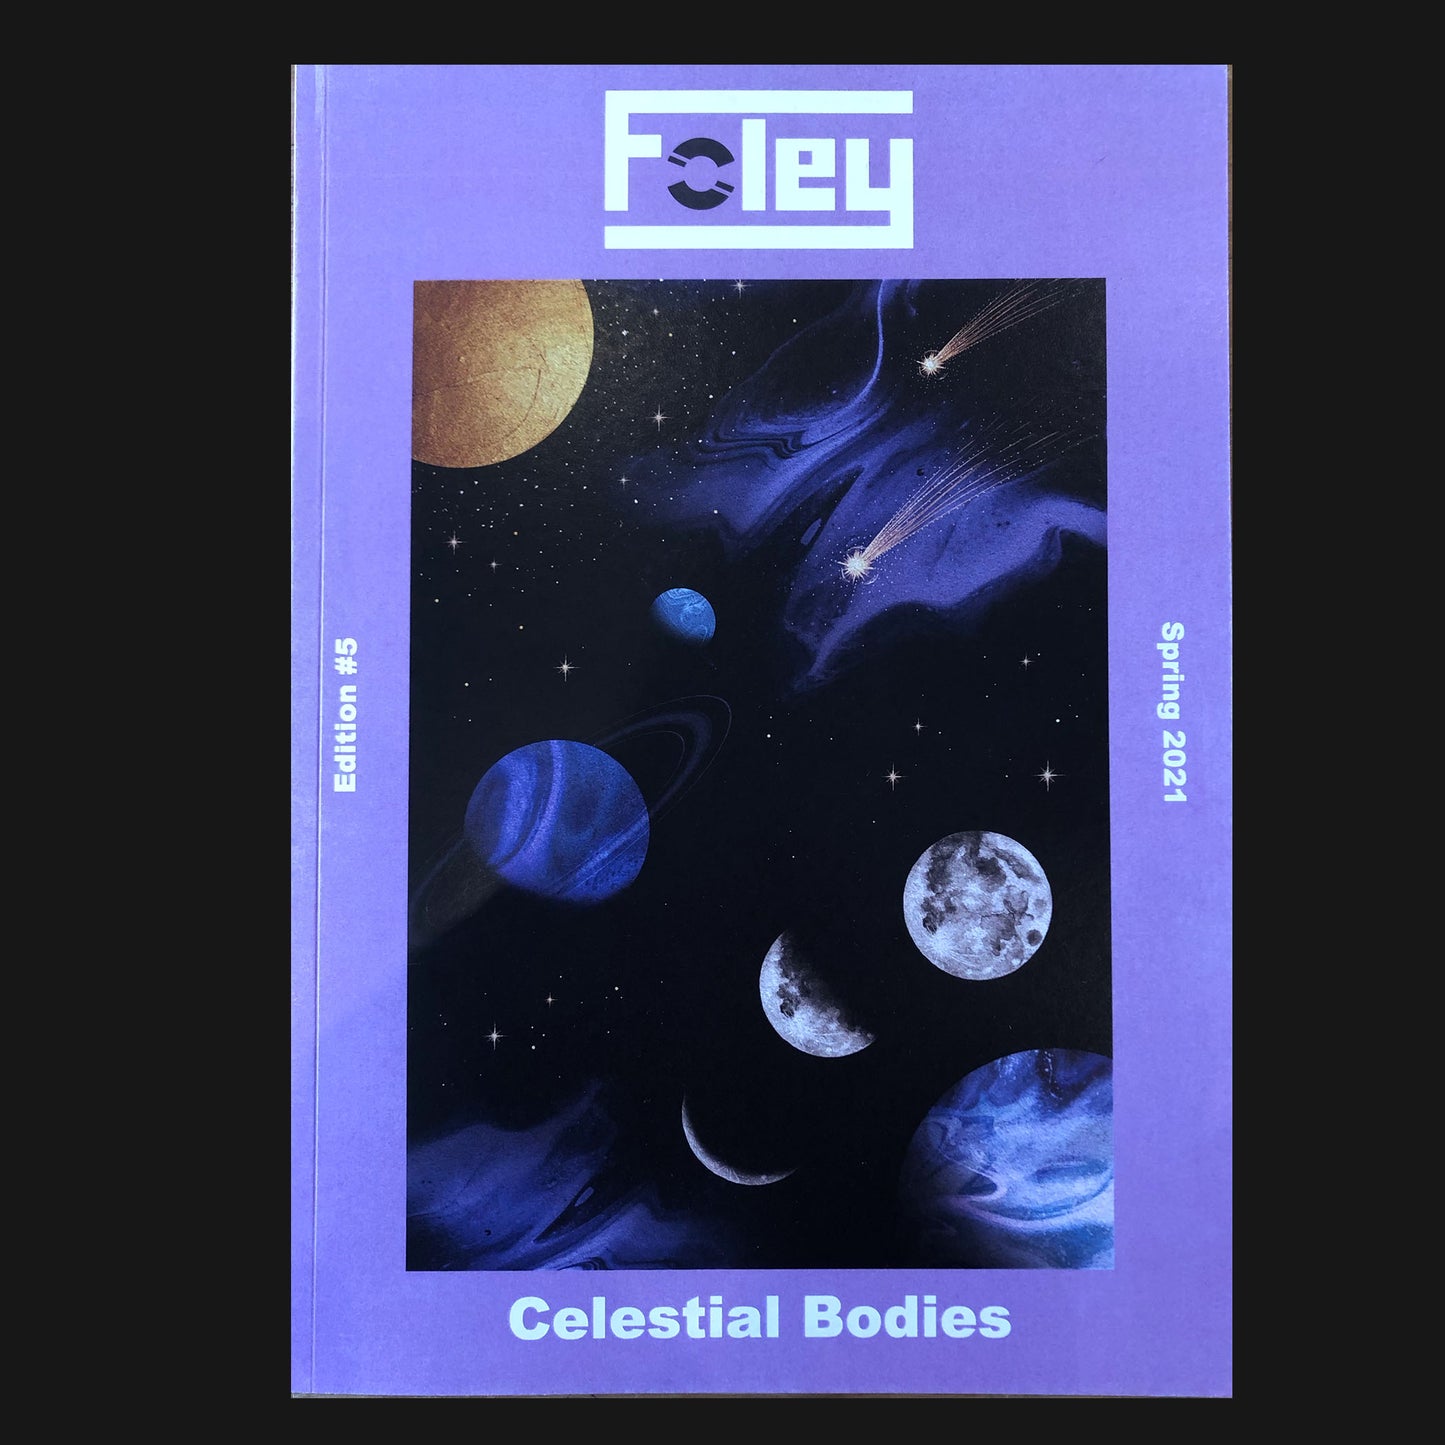 FOLEY - “EDITION 5: CELESTIAL BODIES” MAGAZINE